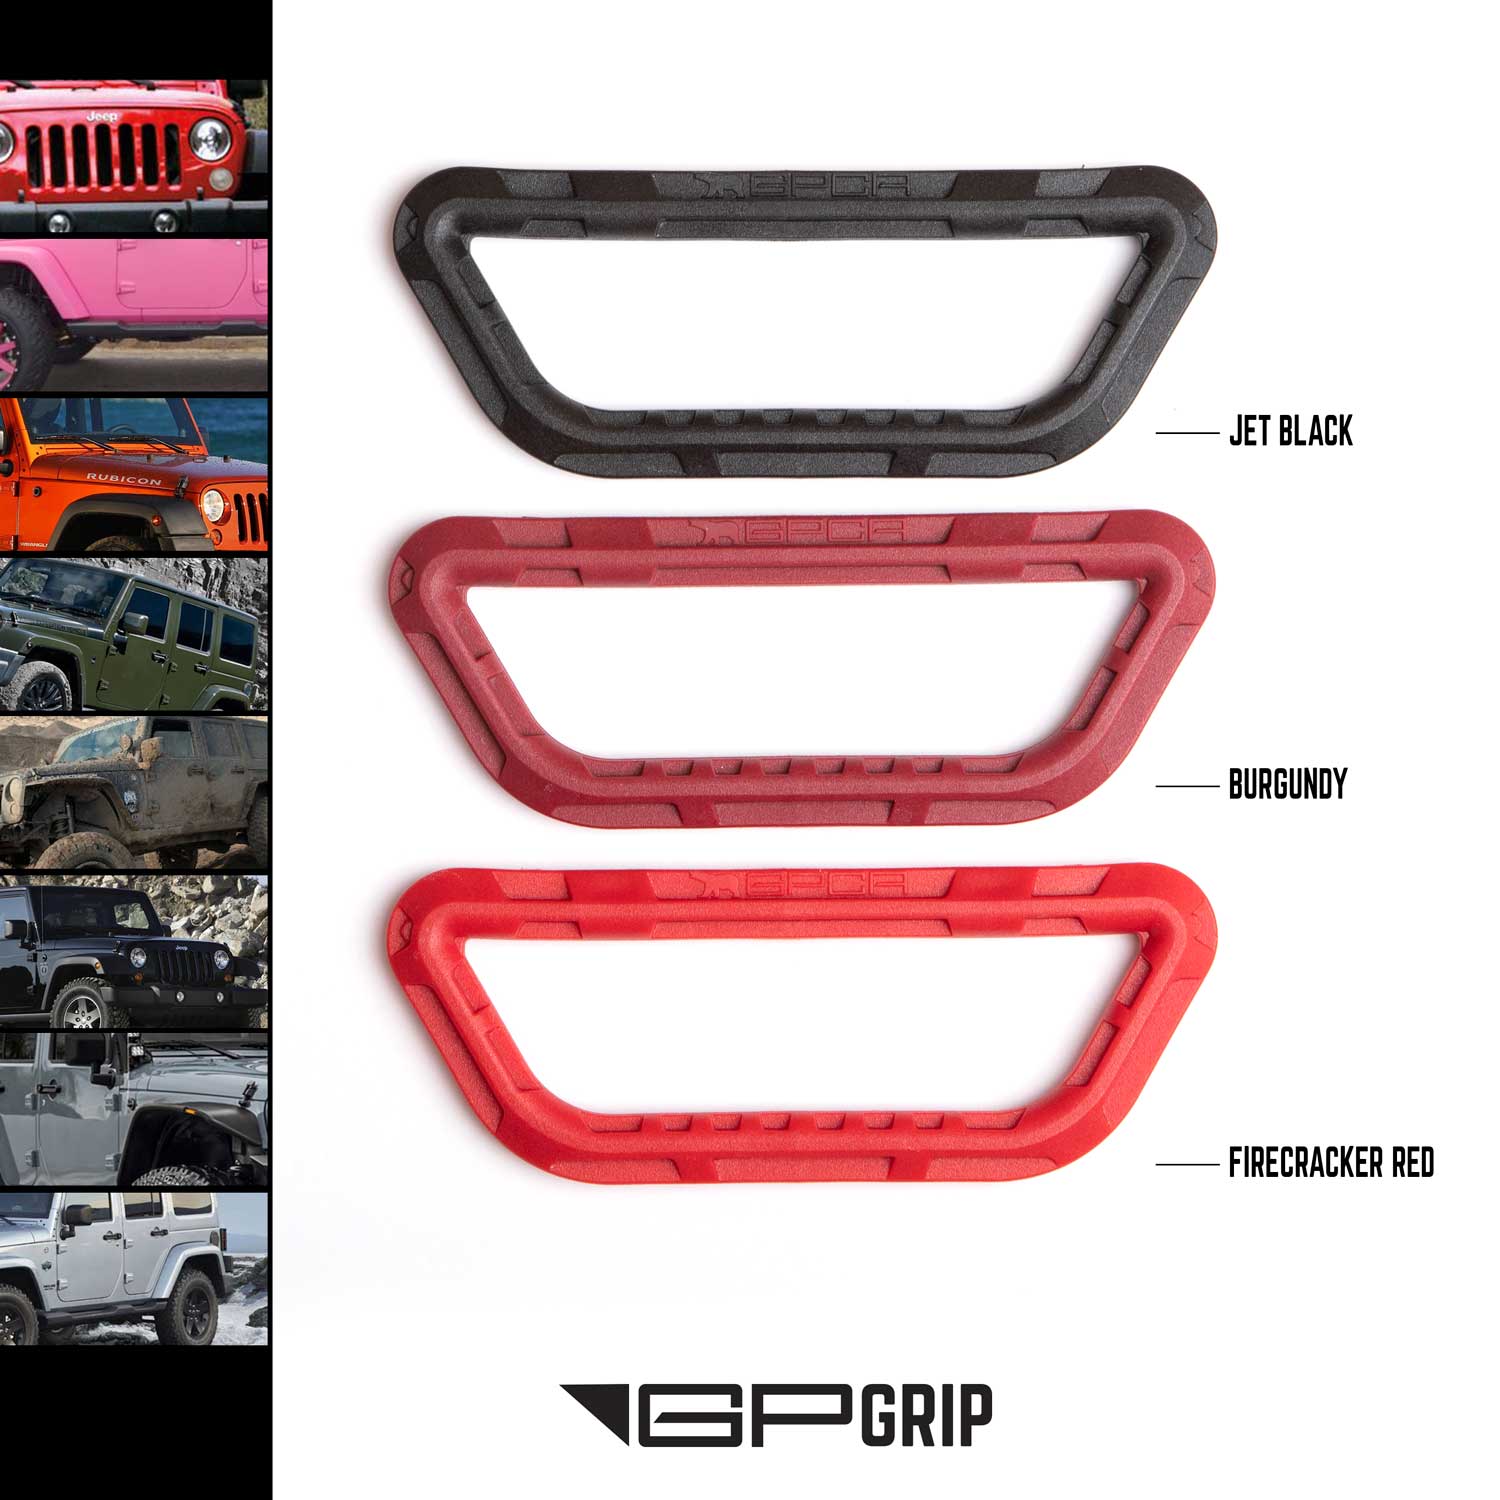 GPCA GP Grip lite color comparison